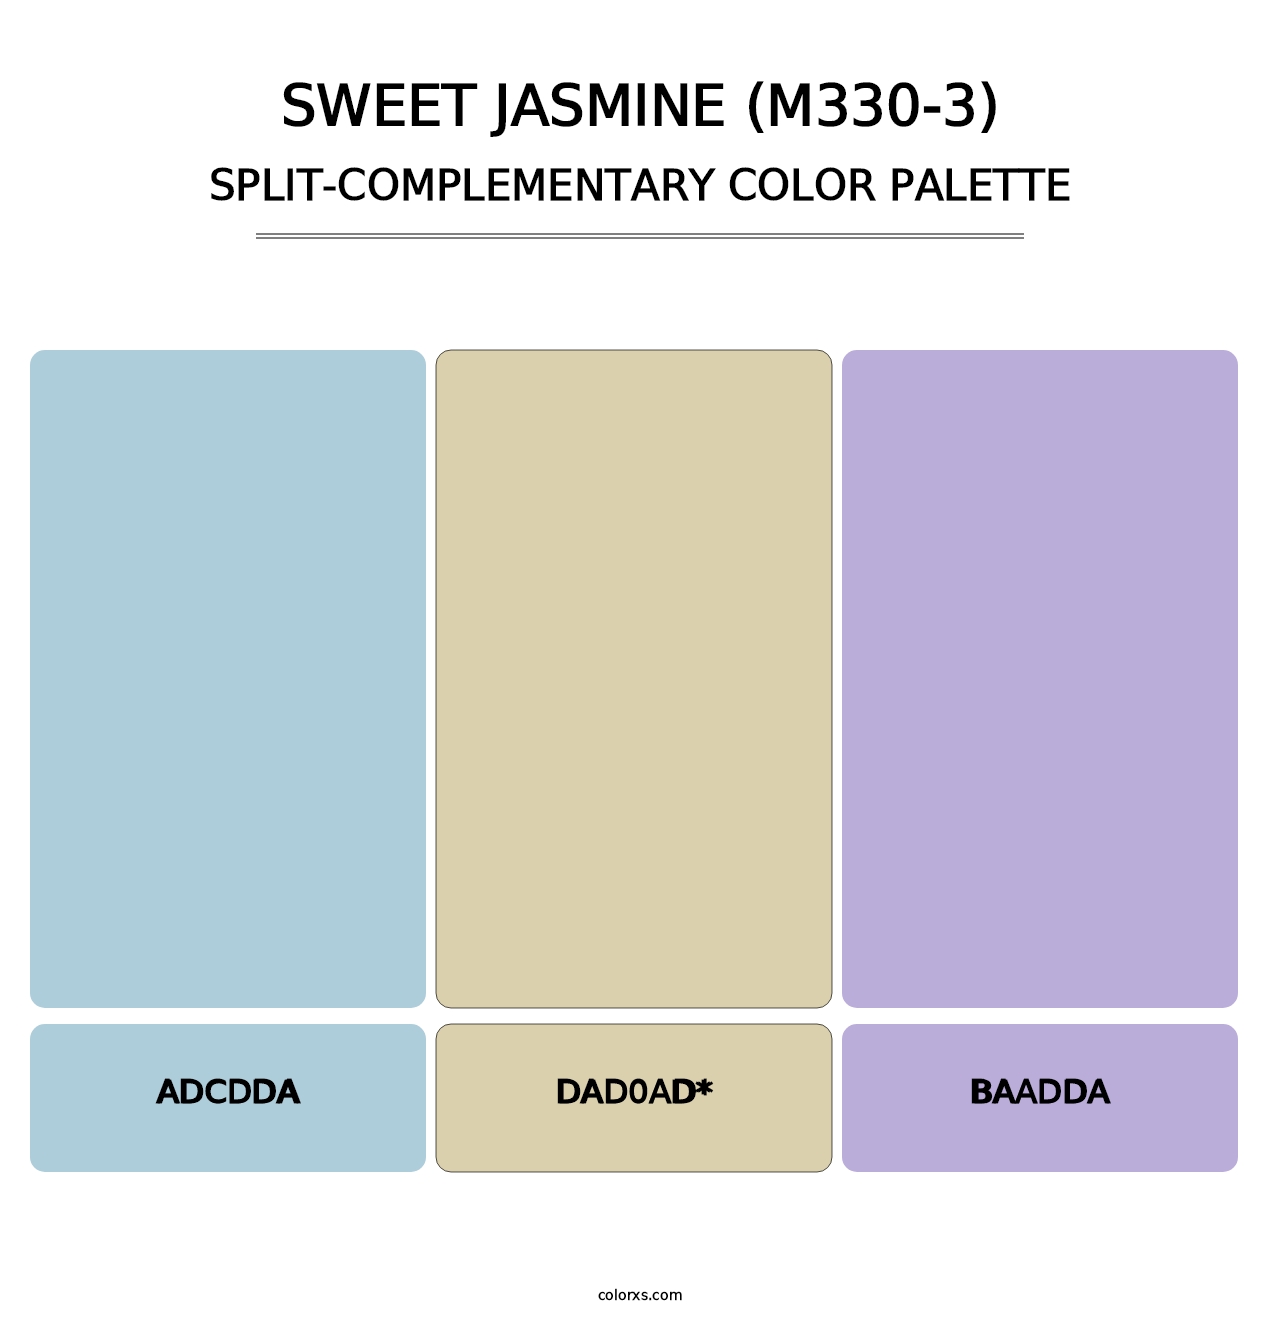 Sweet Jasmine (M330-3) - Split-Complementary Color Palette